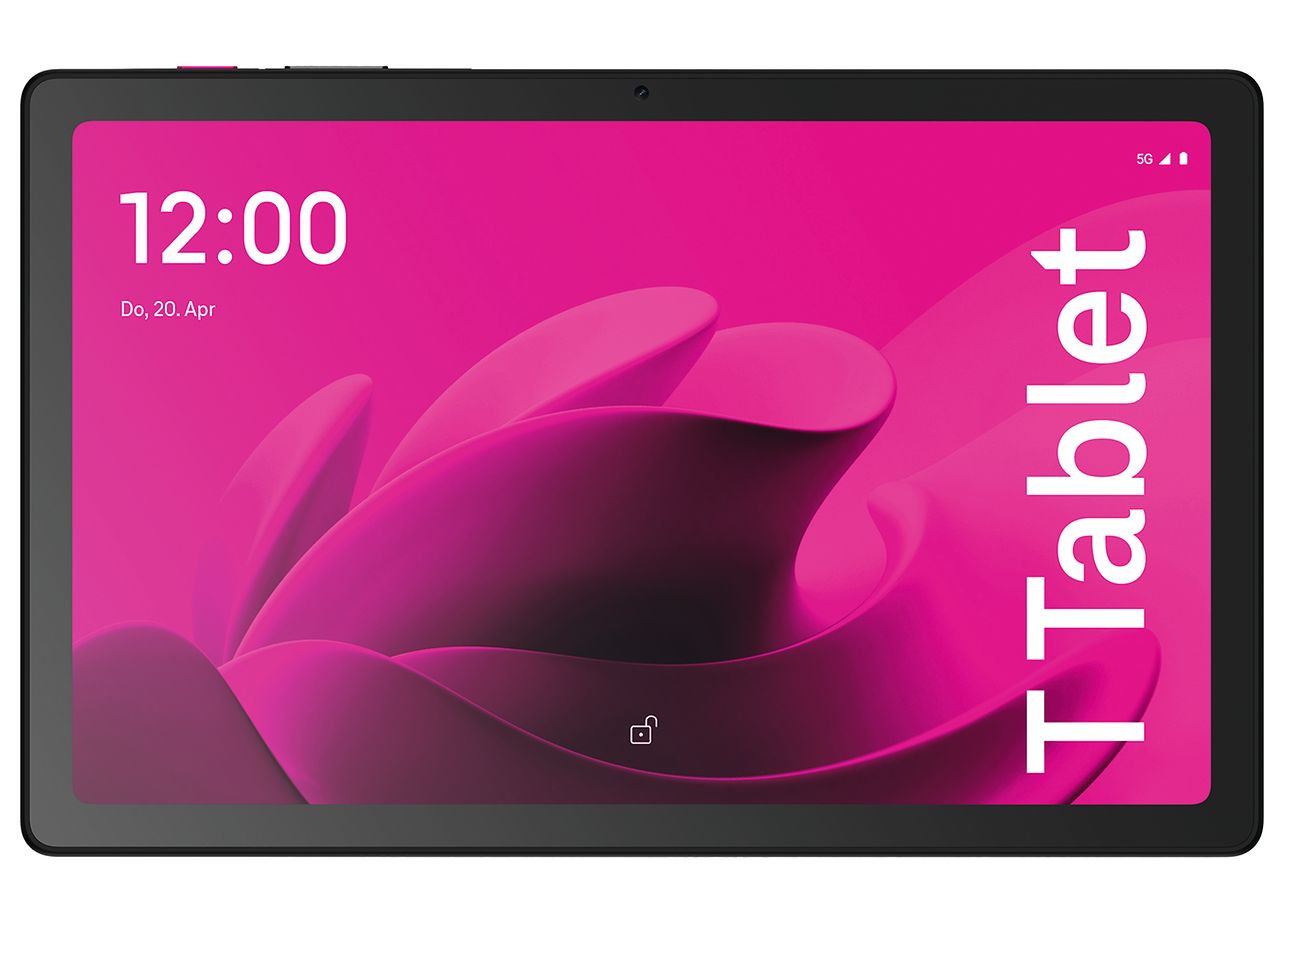 Deutsche Telekom launches new 5G tablet for €1